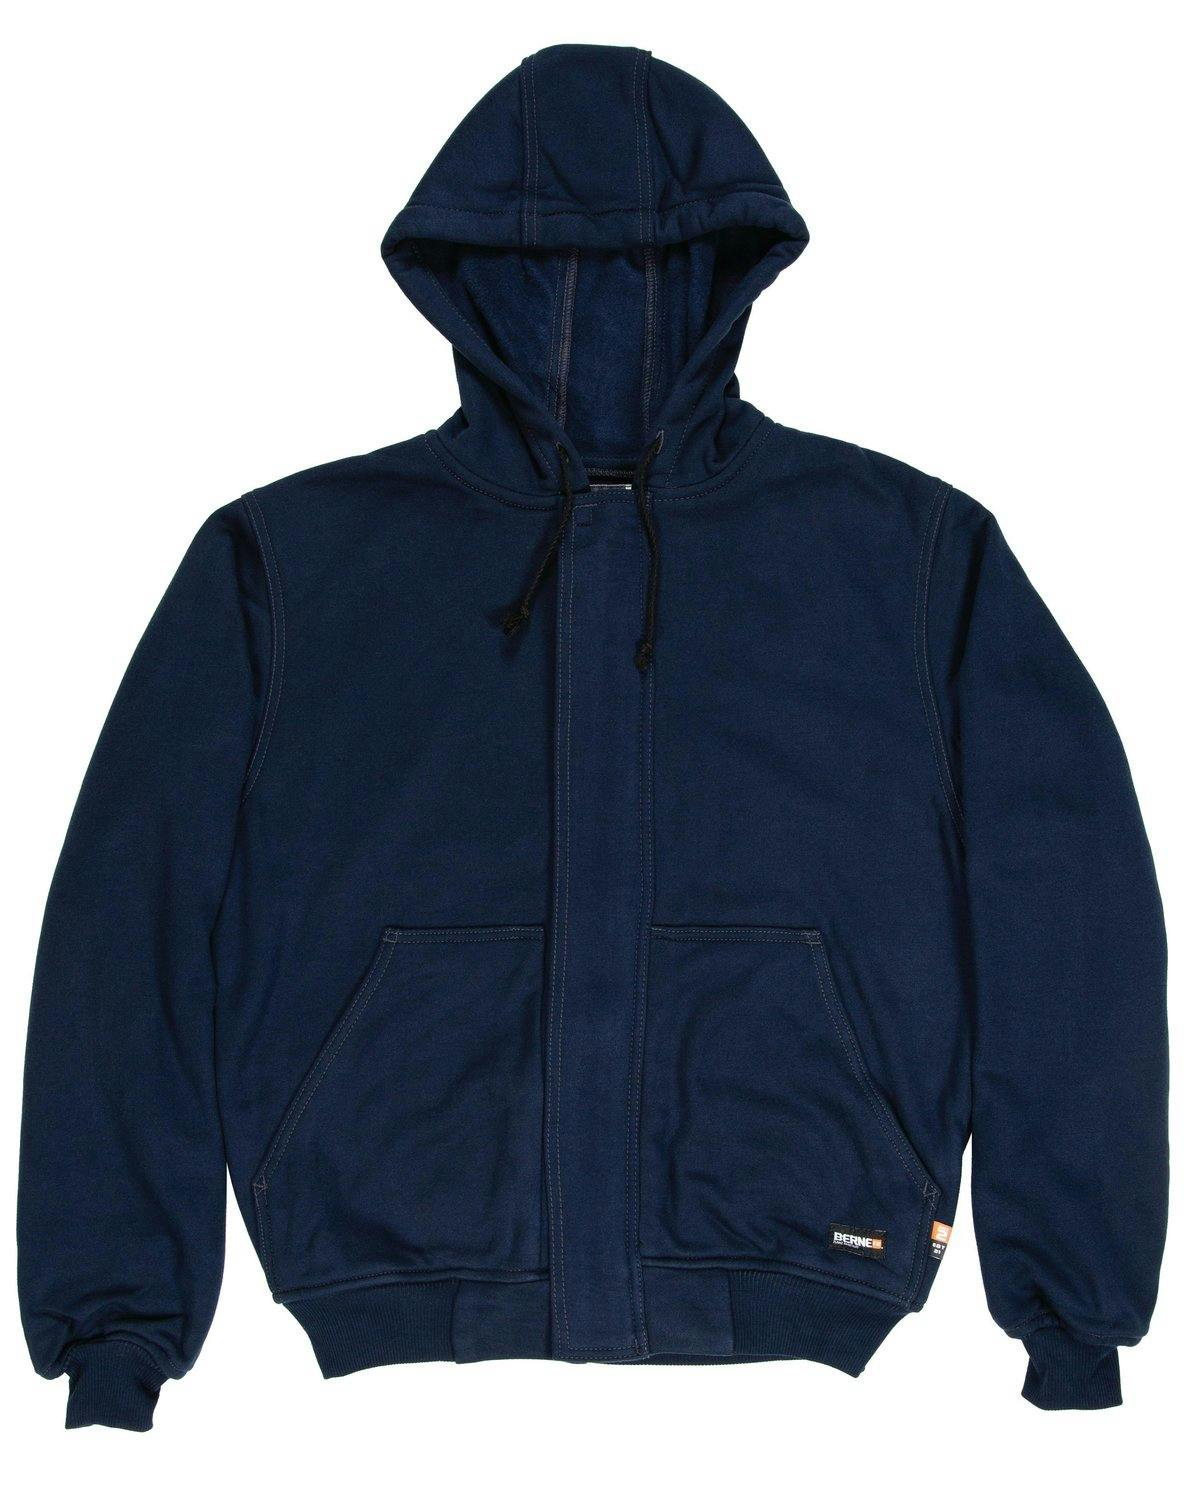 Image for Men's Flame Resistant Full-Zip Hooded Sweatshirt